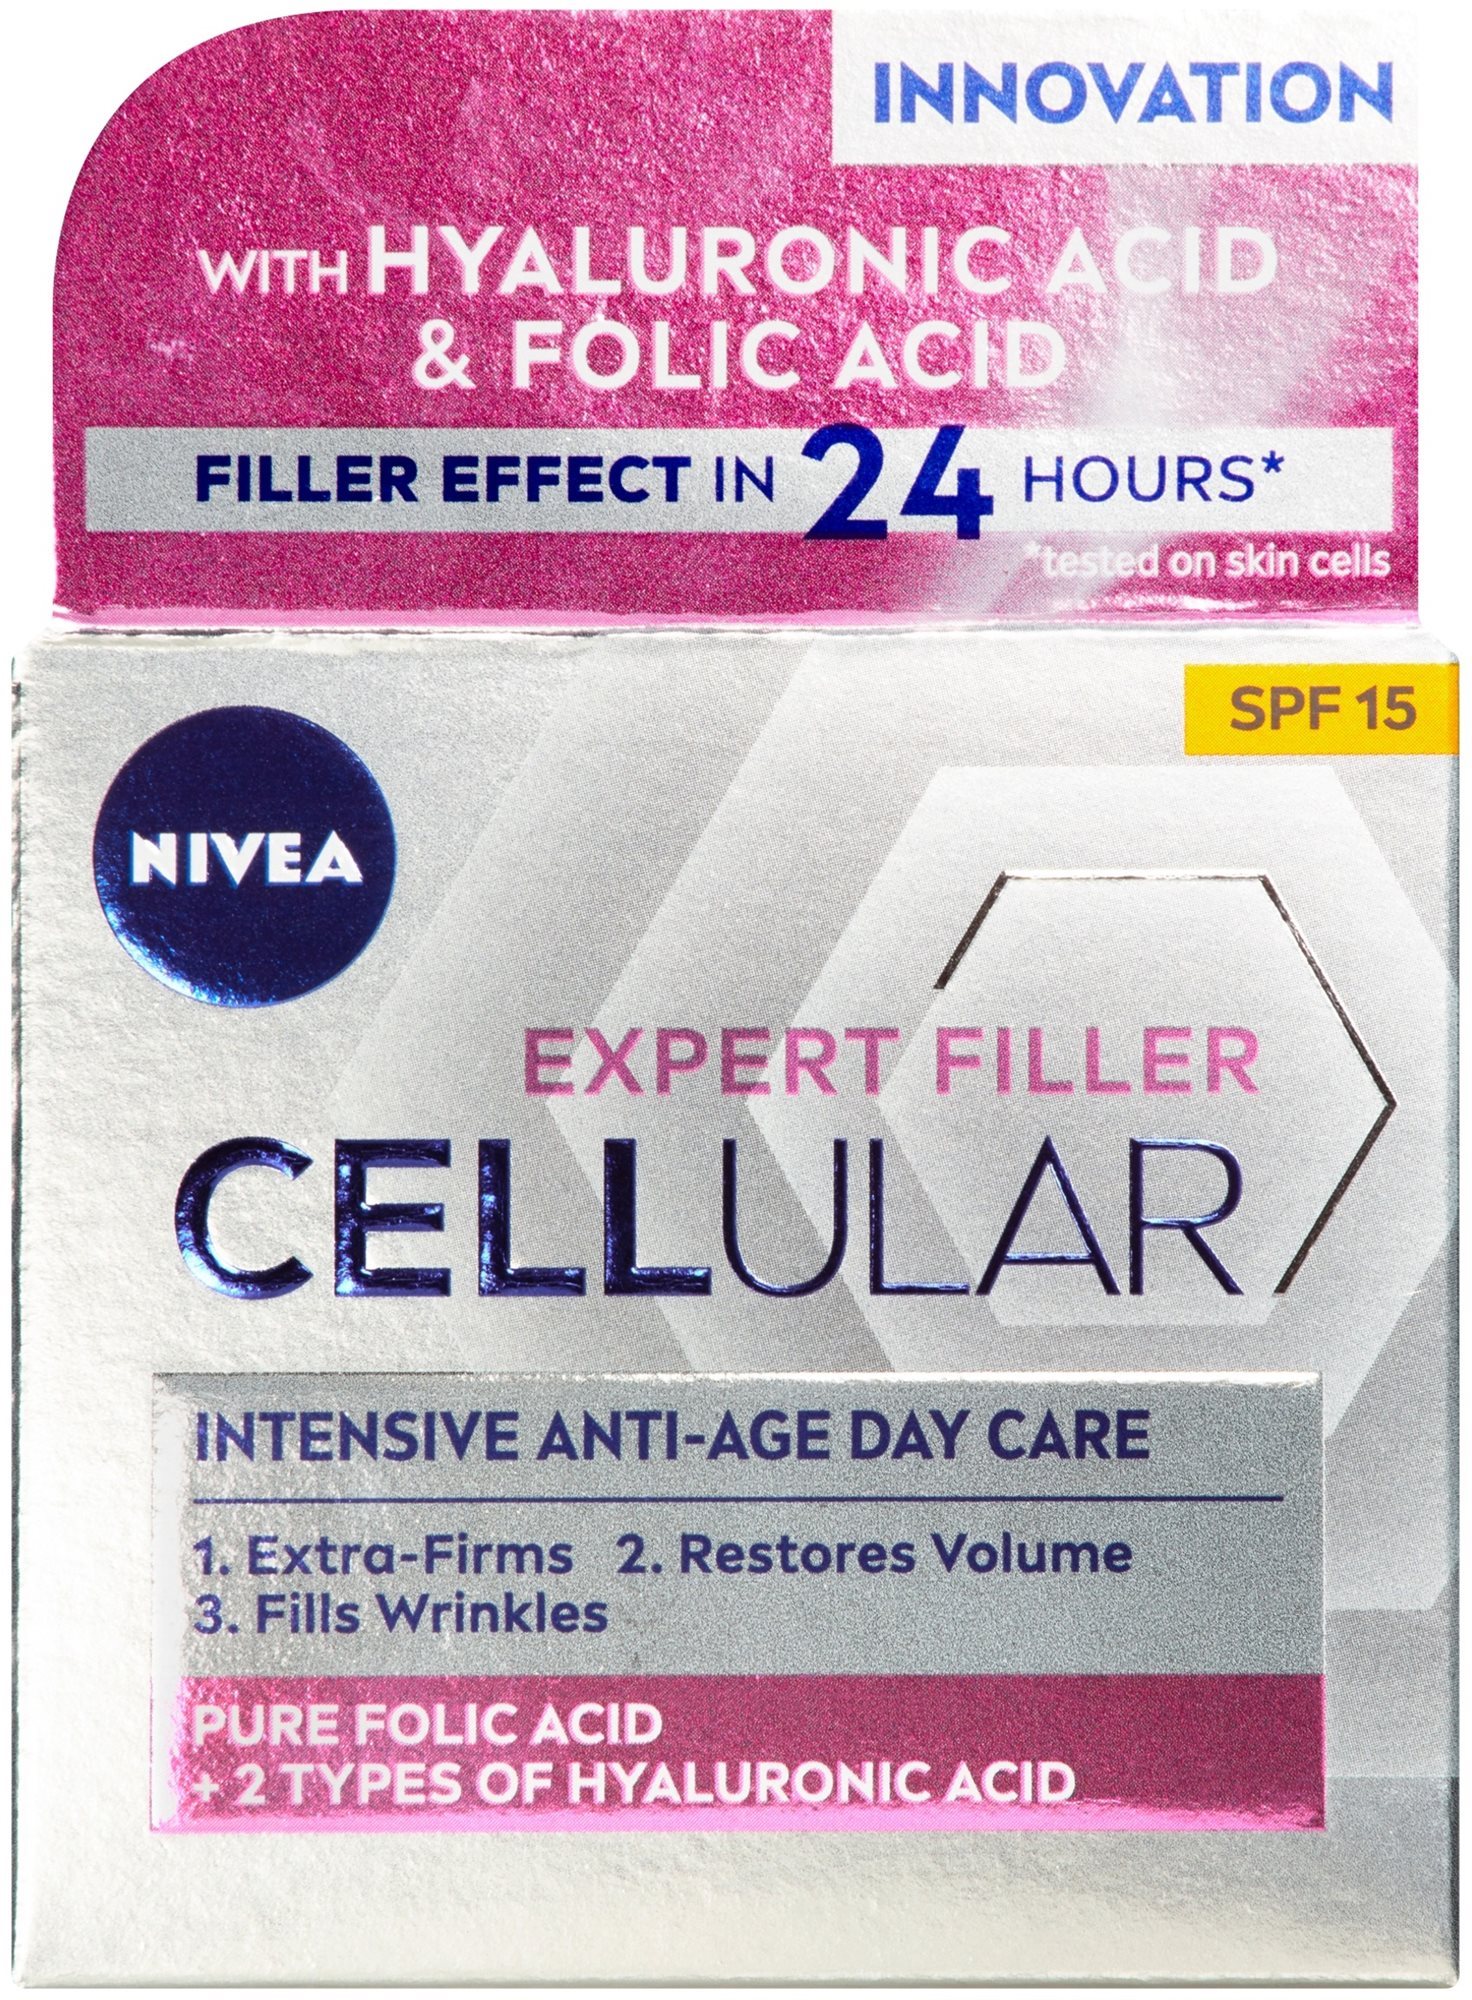 NIVEA Cellular Anti-Age 50 ml